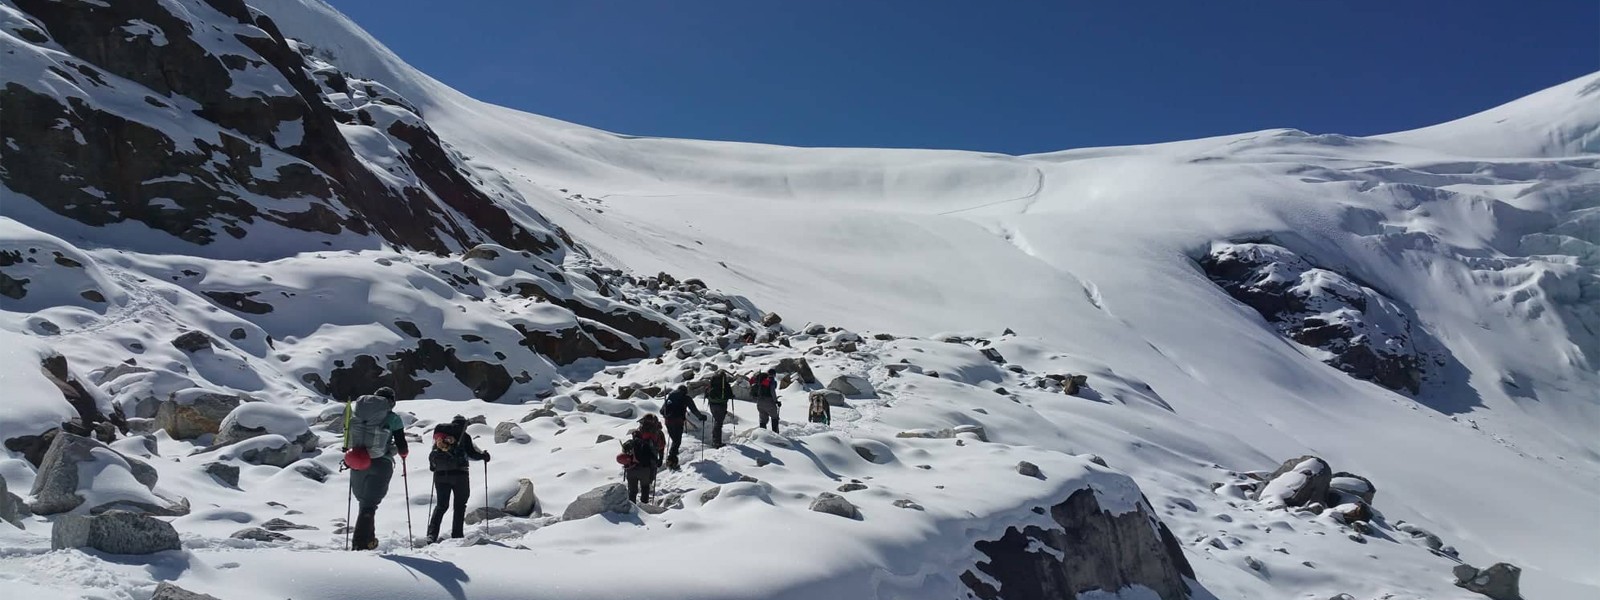 Everest Three High Passes Trekking in Khumbu Region